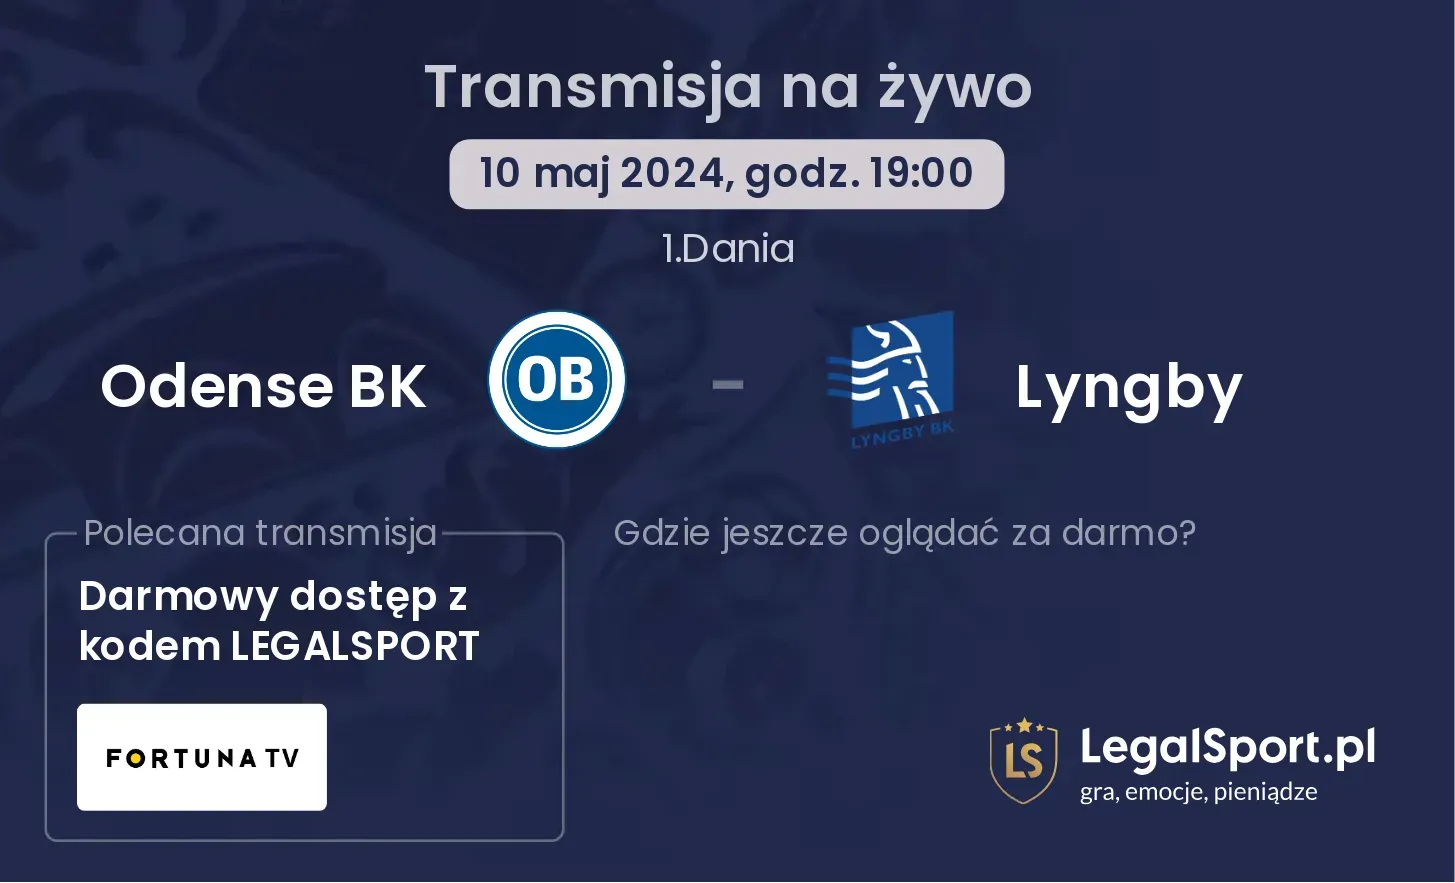 Odense BK - Lyngby transmisja na żywo